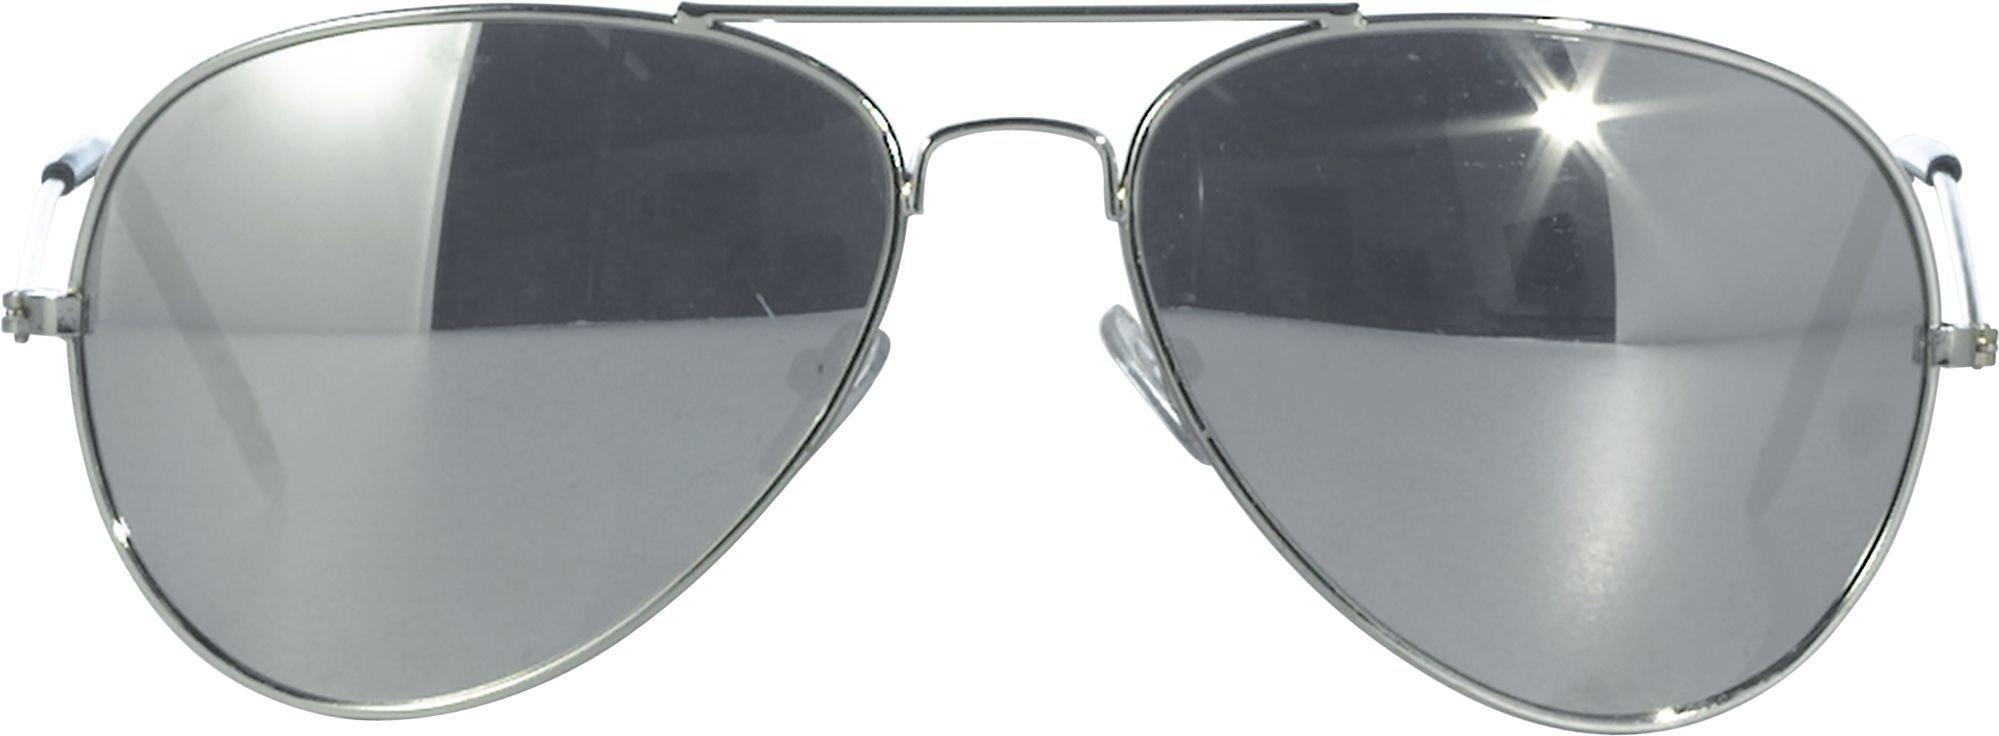 Aviation Sunglasses, Party Eyewear, Kids Goggles